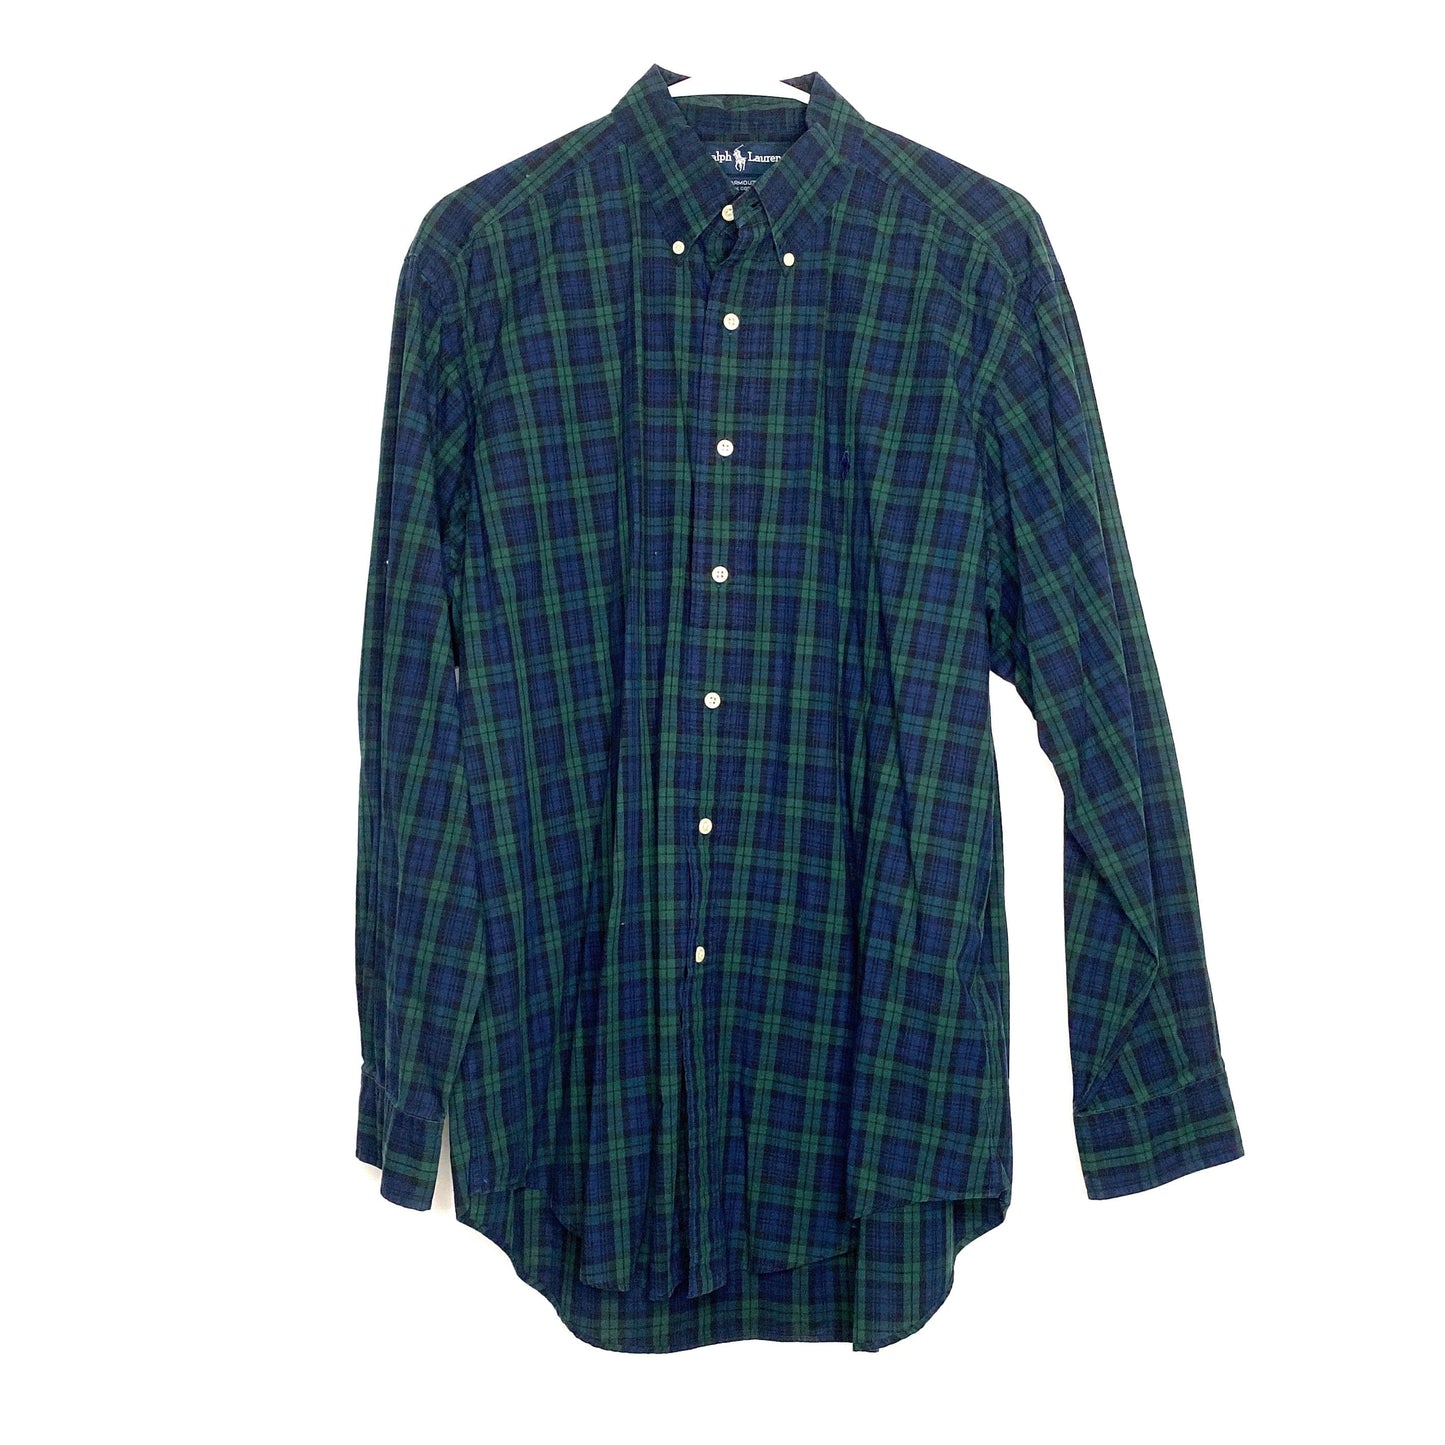 Ralph Lauren Mens Size 16 34/35 M Blue Green Plaid Yarmouth Dress Shirt Button-Up L/s